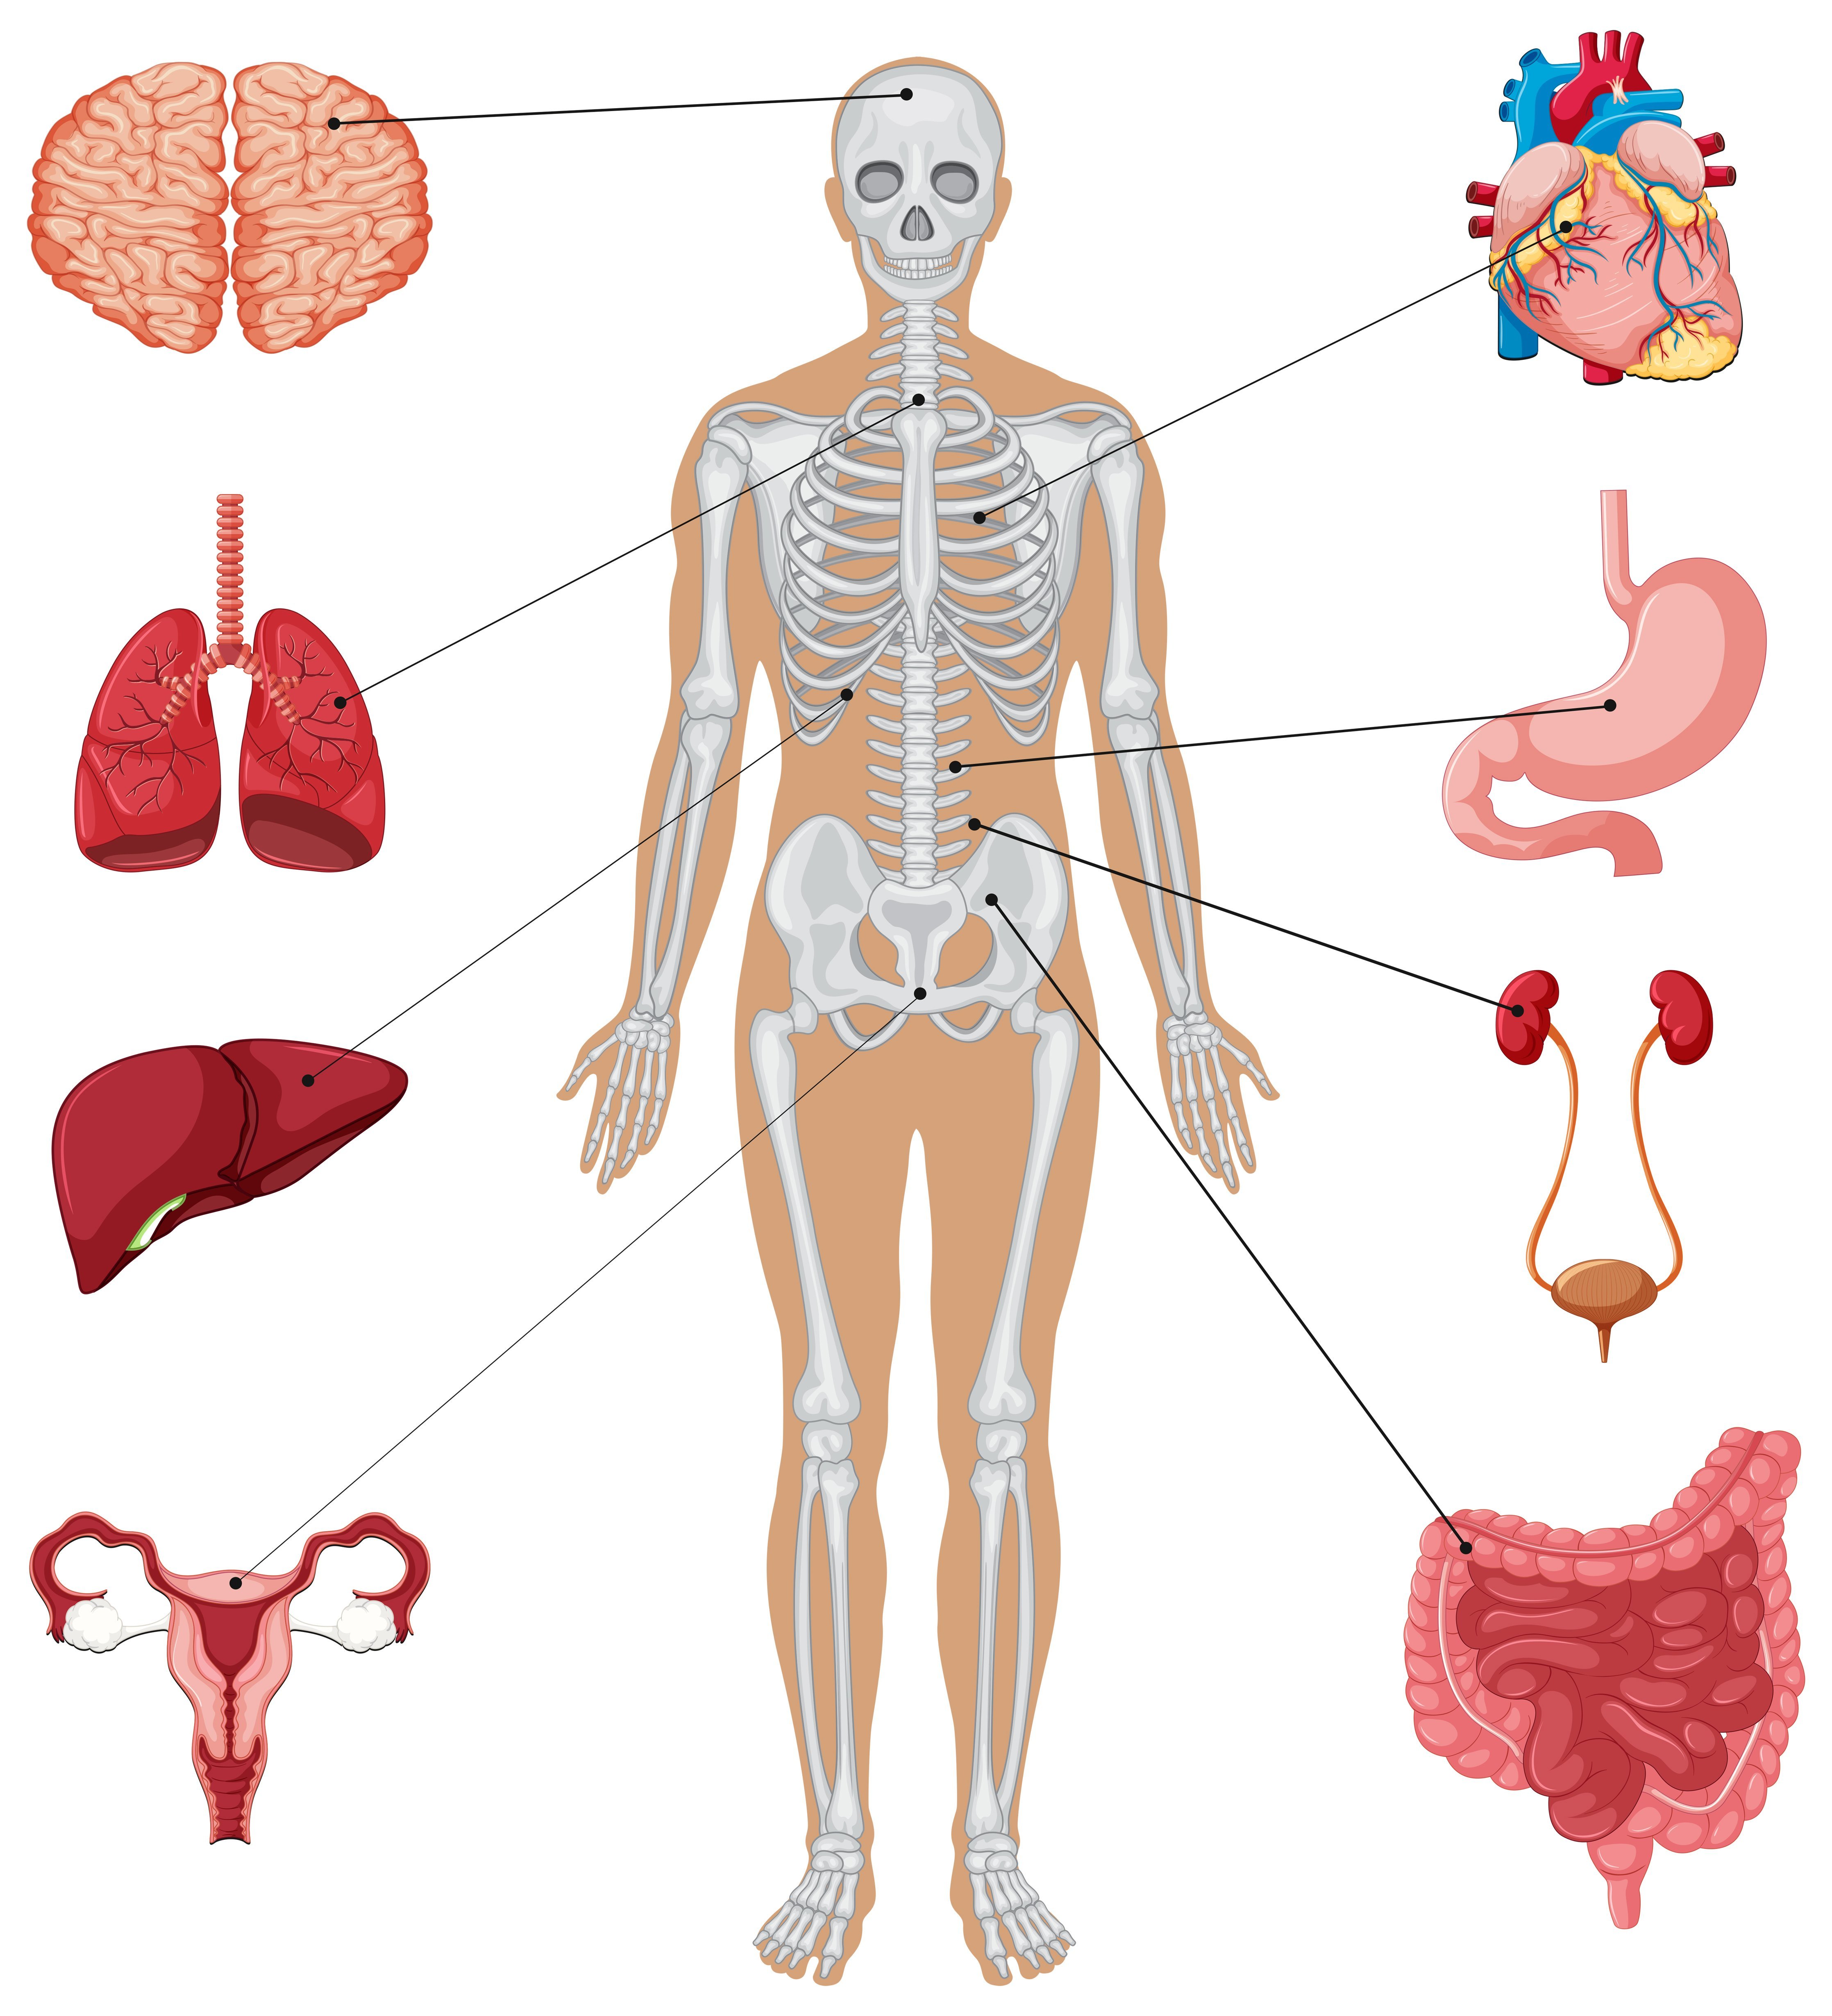 Макет человека с органами. Скелет человека с внутренними органами. Схема скелета человека с органами.